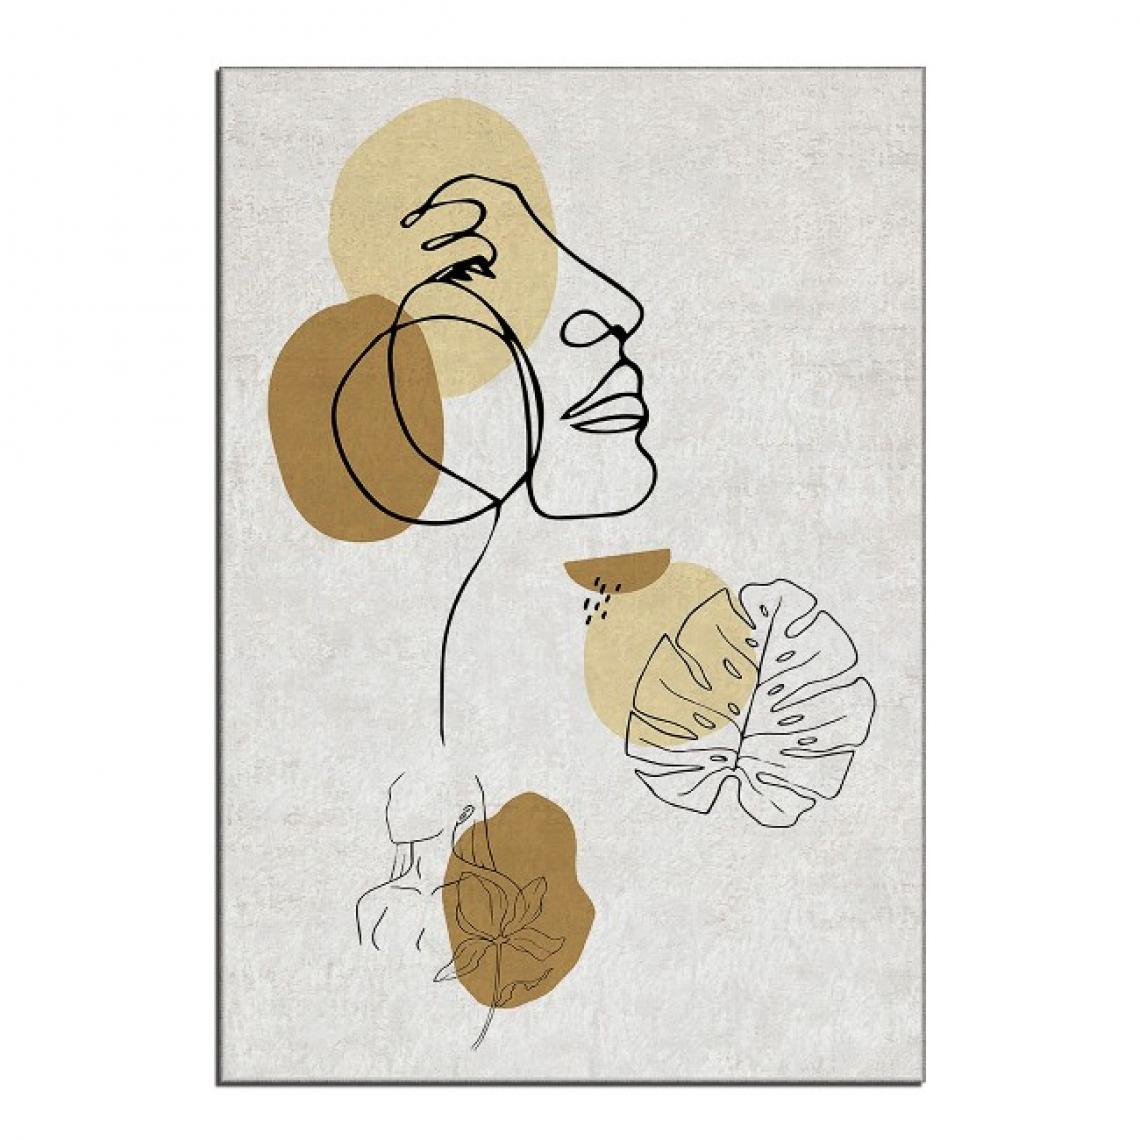 Homemania - HOMEMANIA Tapis décoratif Outline - Blanc, Marron - 180 x 280 cm - Tapis